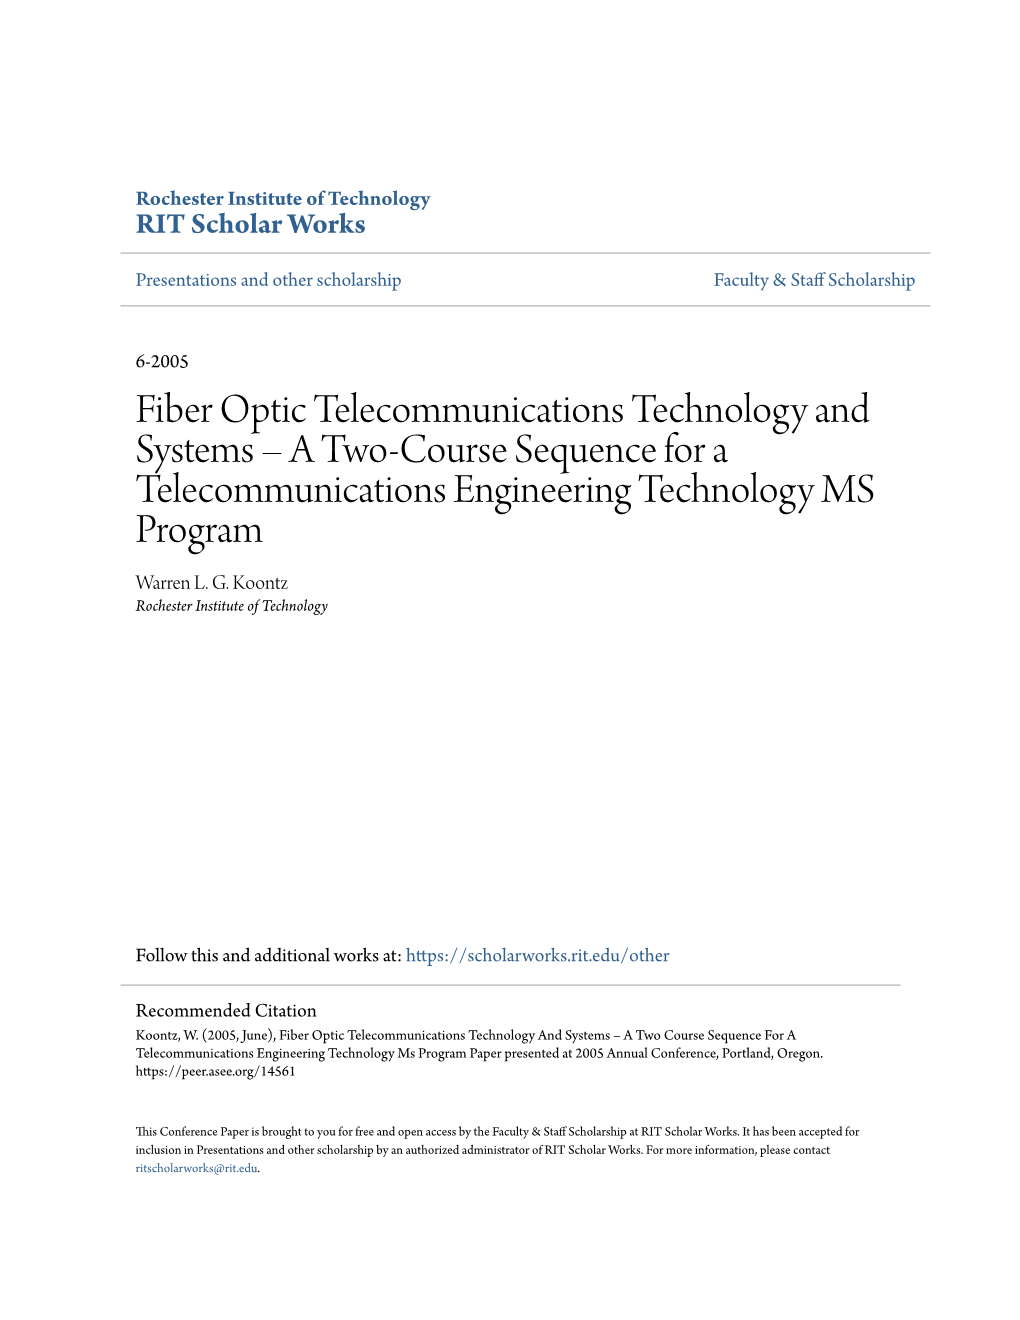 Fiber Optic Telecommunications Technology and Systems Â•Fi a Two